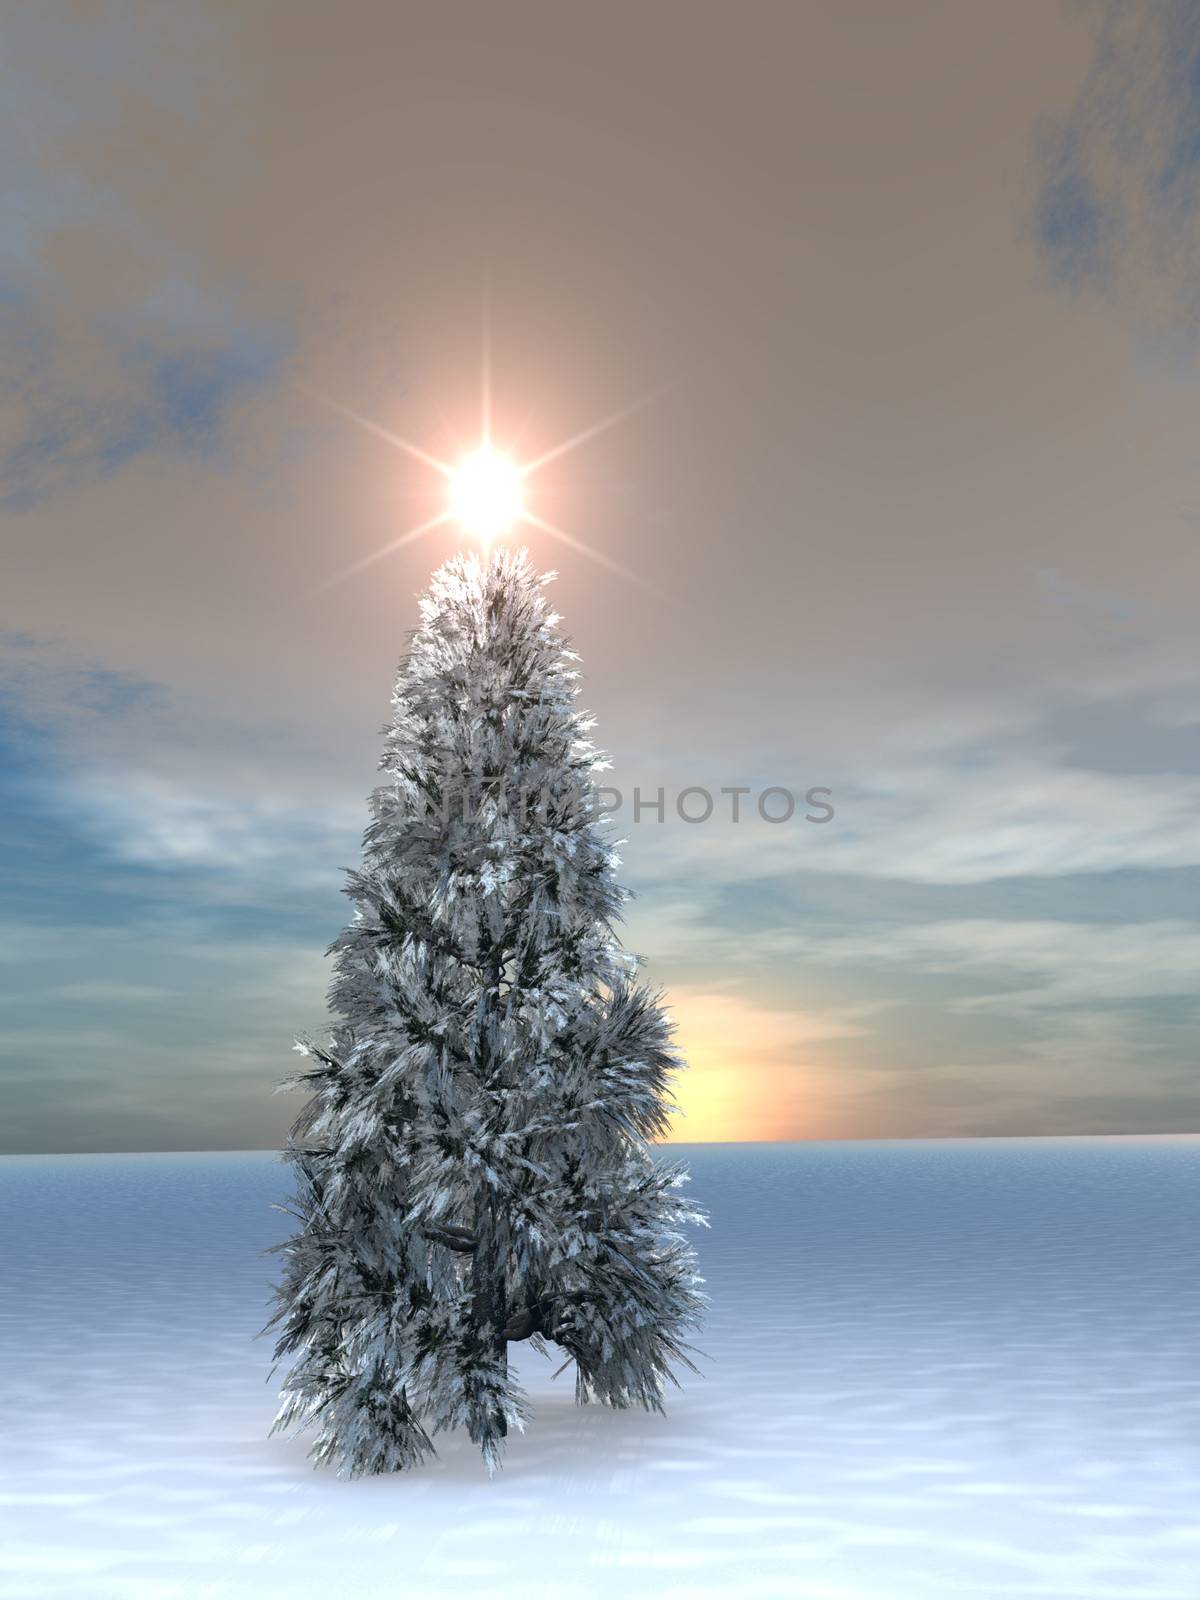 Christmas Tree Sunrise - Beautiful Christmas Tree in snow on the horizon during sunrise